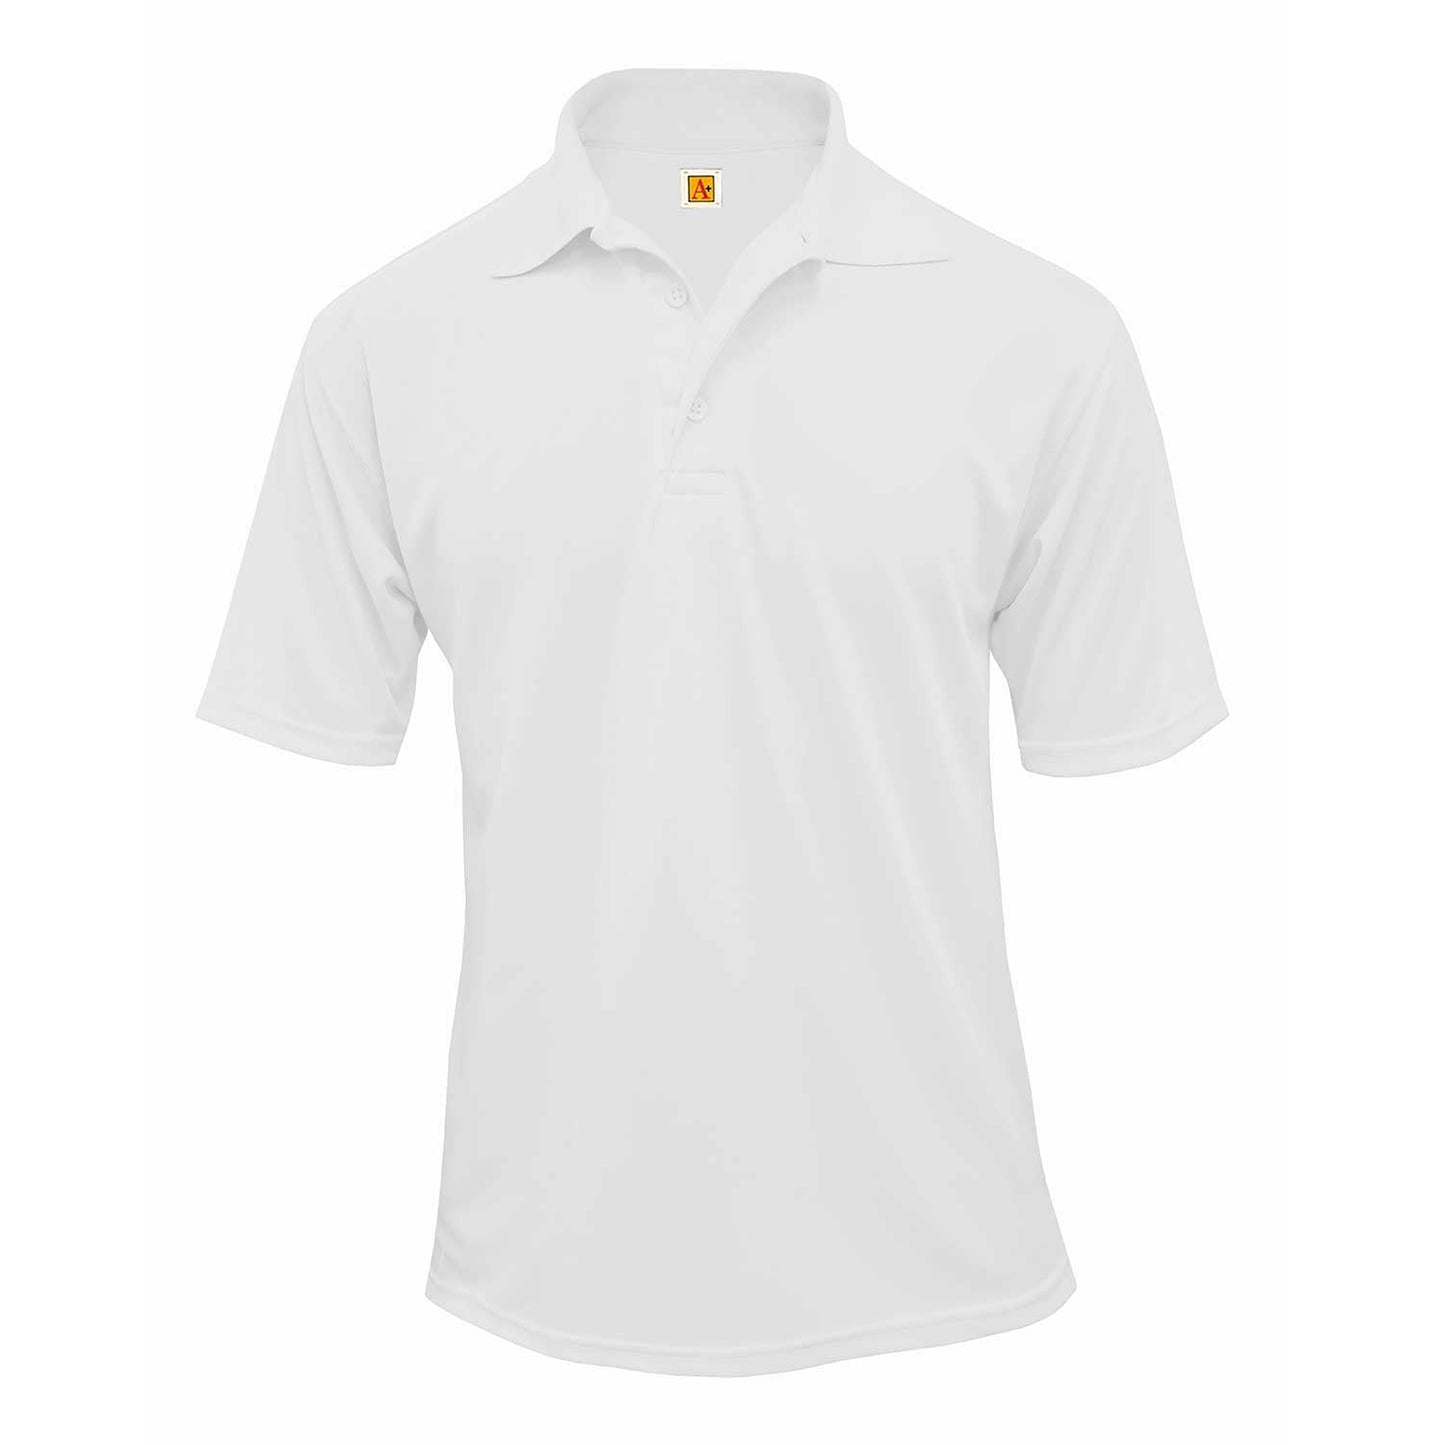 Performance Dri-fit Jersey Knit Short Sleeve Shirt (Unisex) w/Logo - 1102